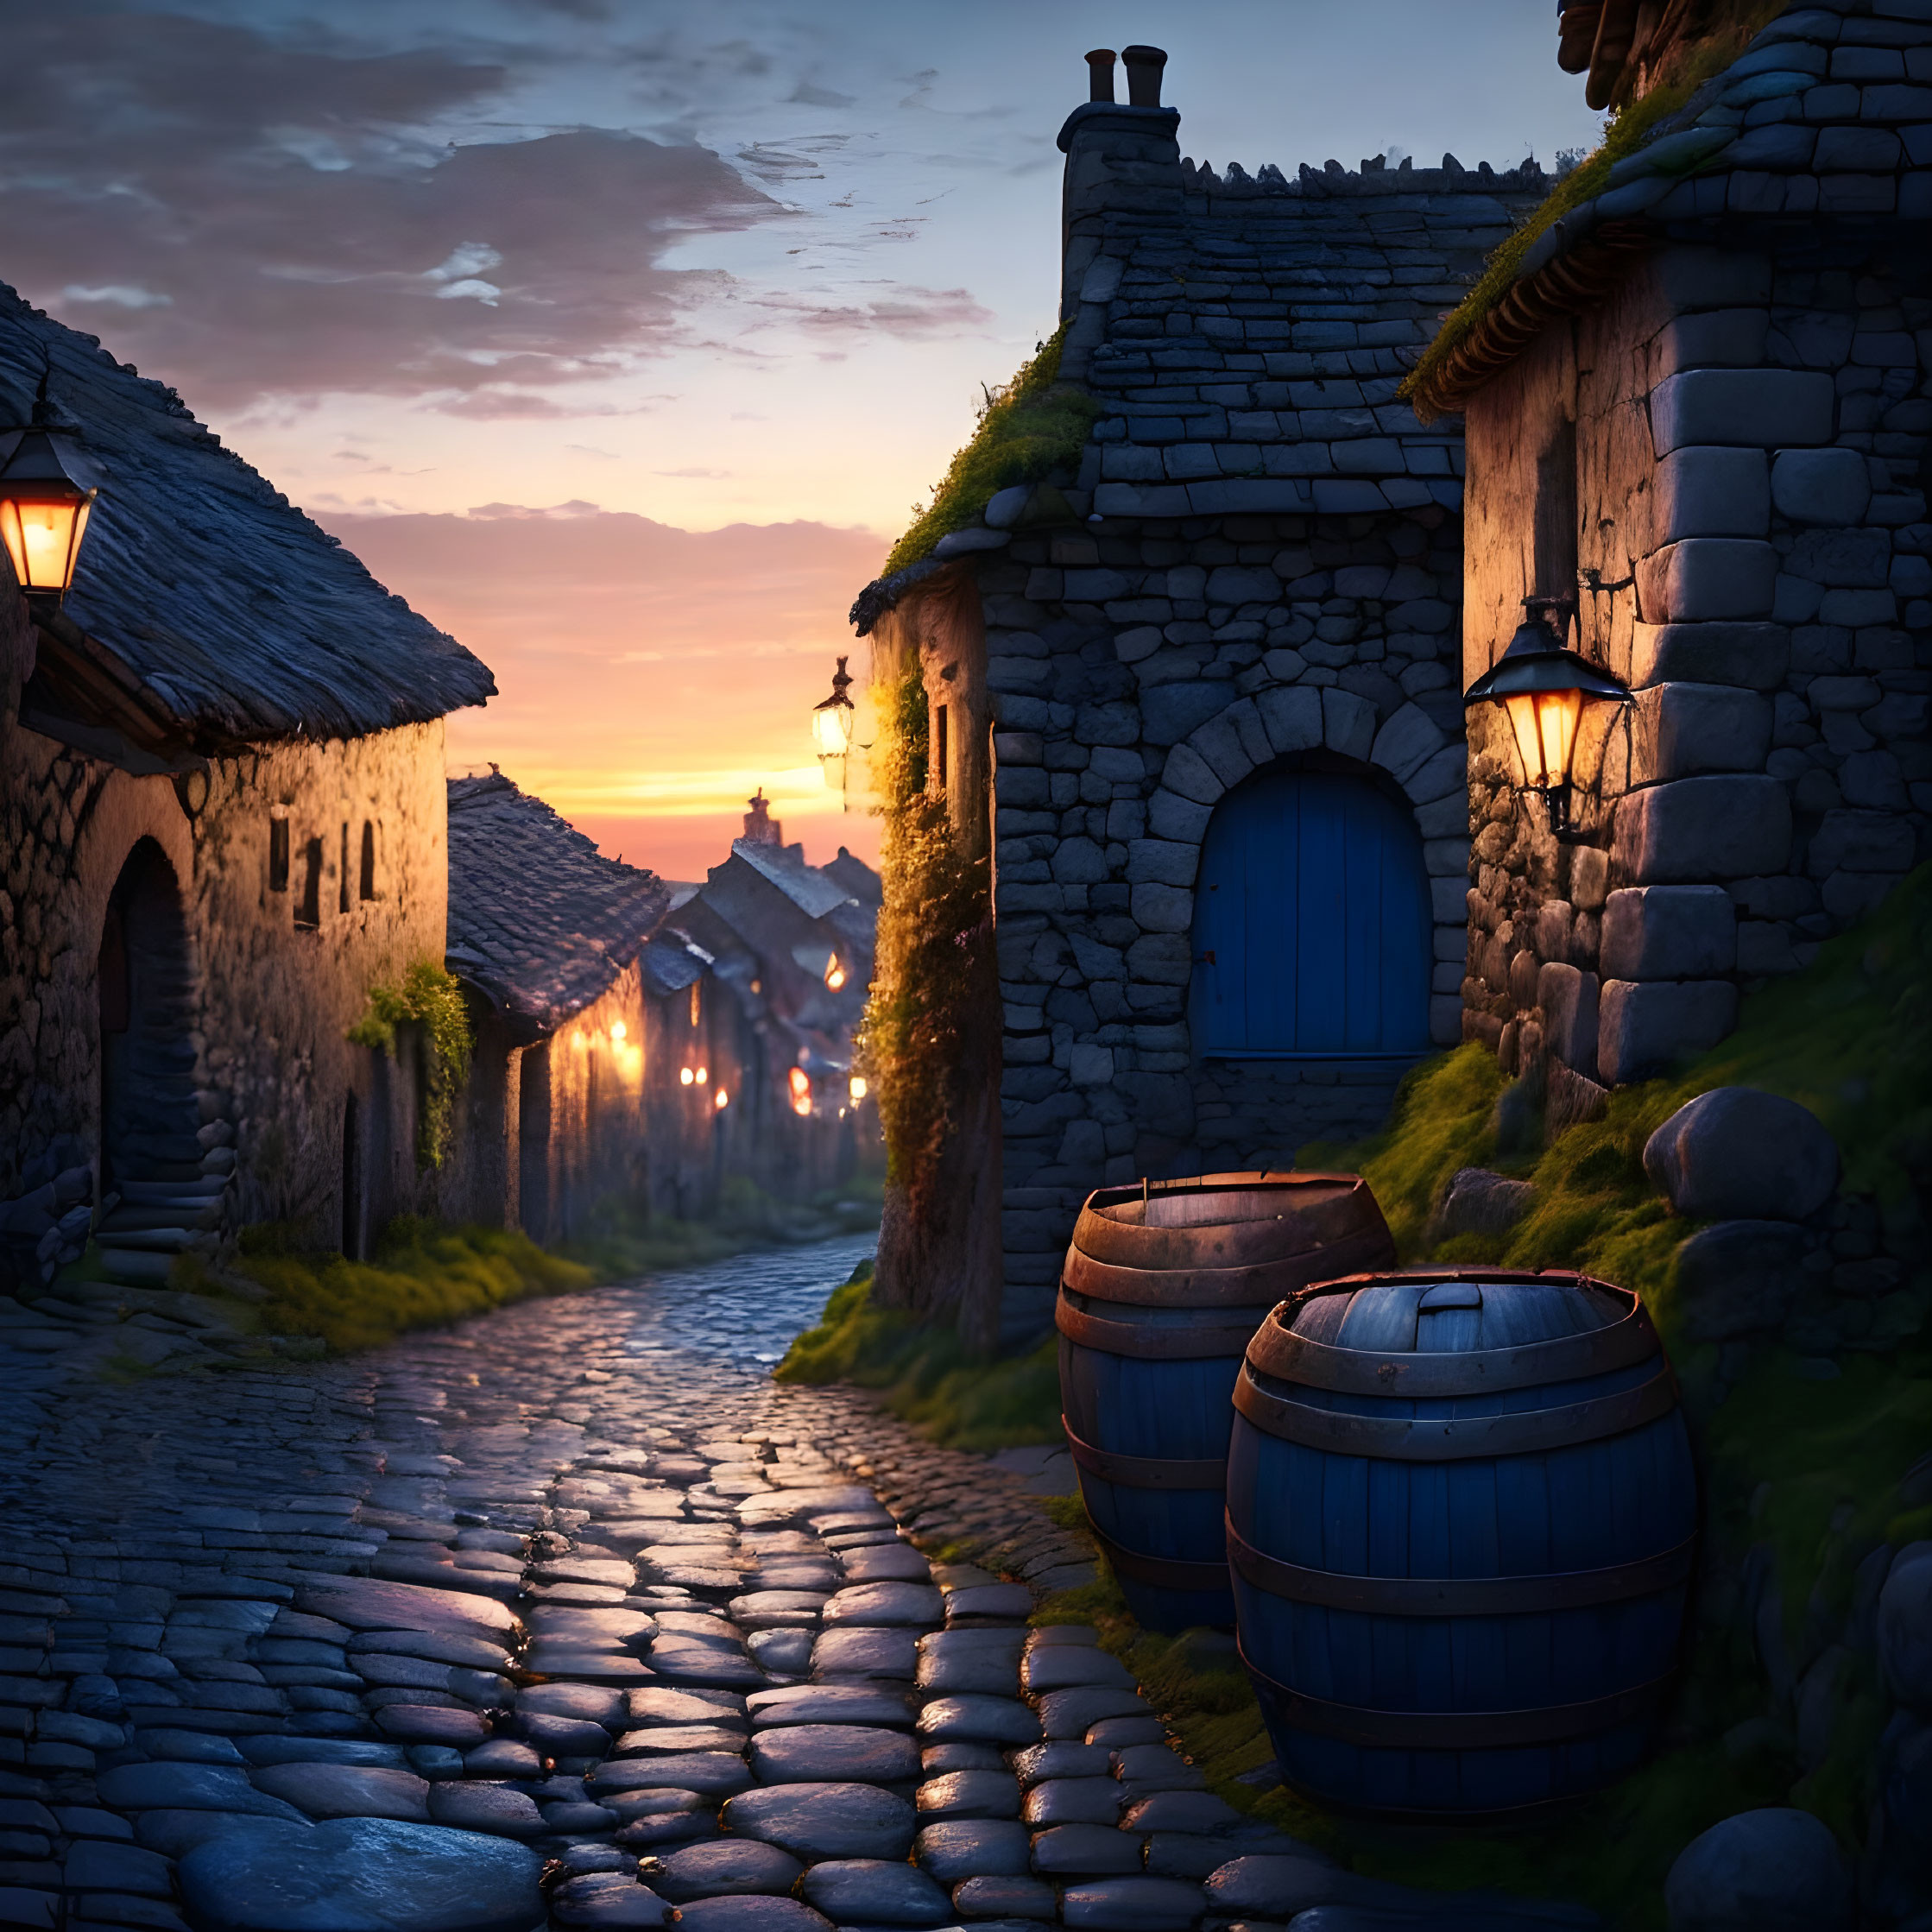 Twilight scene of stone-paved village street with lanterns, cobblestone houses, wooden door